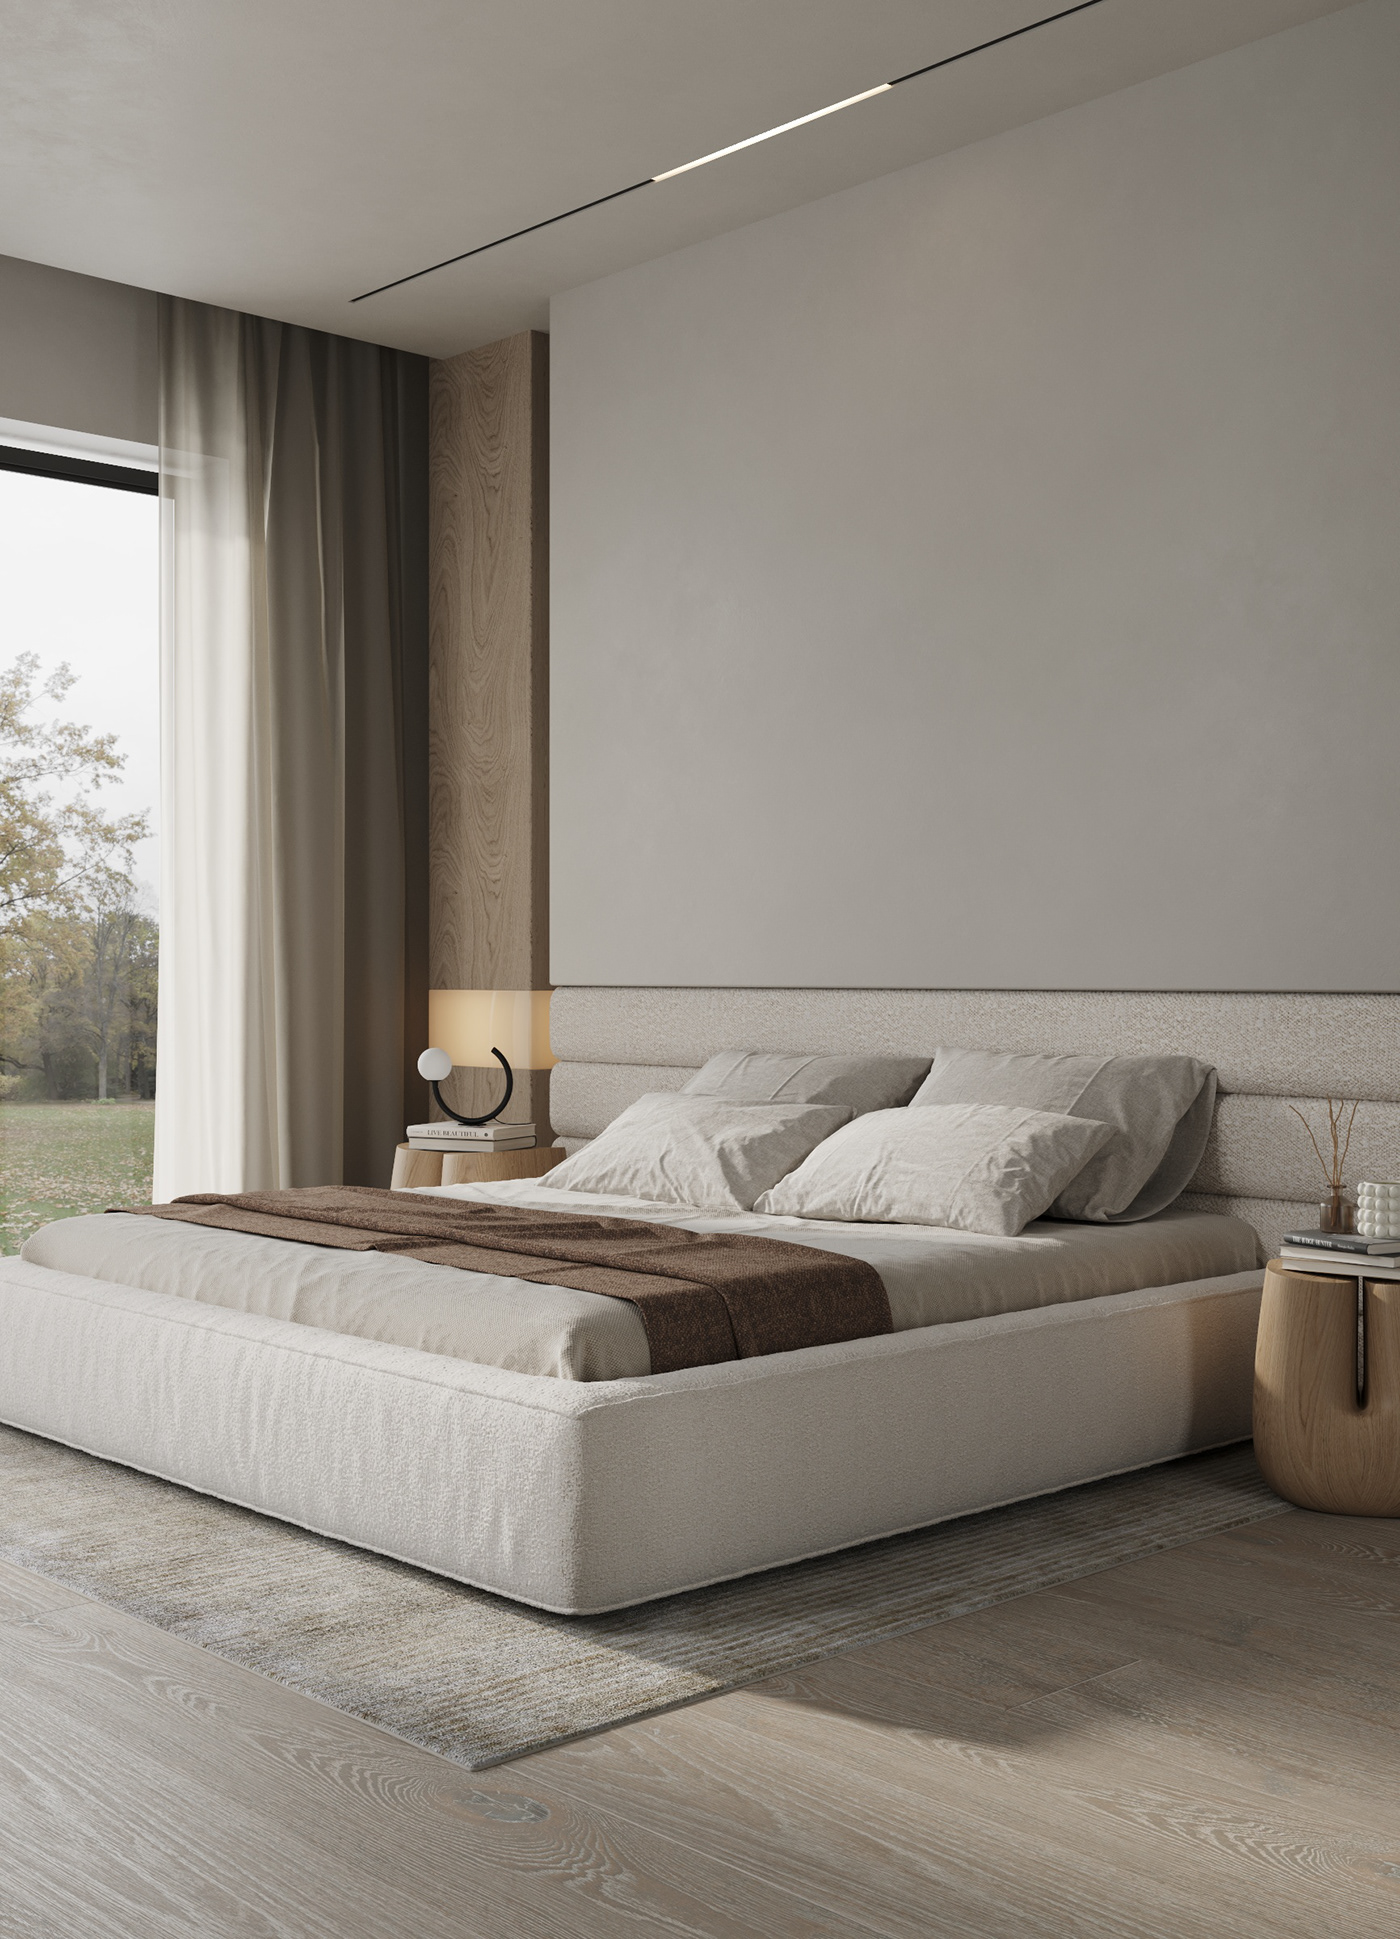 3dsmax bedroom design corona render  Dining Design indoor pool interior design  living design Minimal interior yoga nook